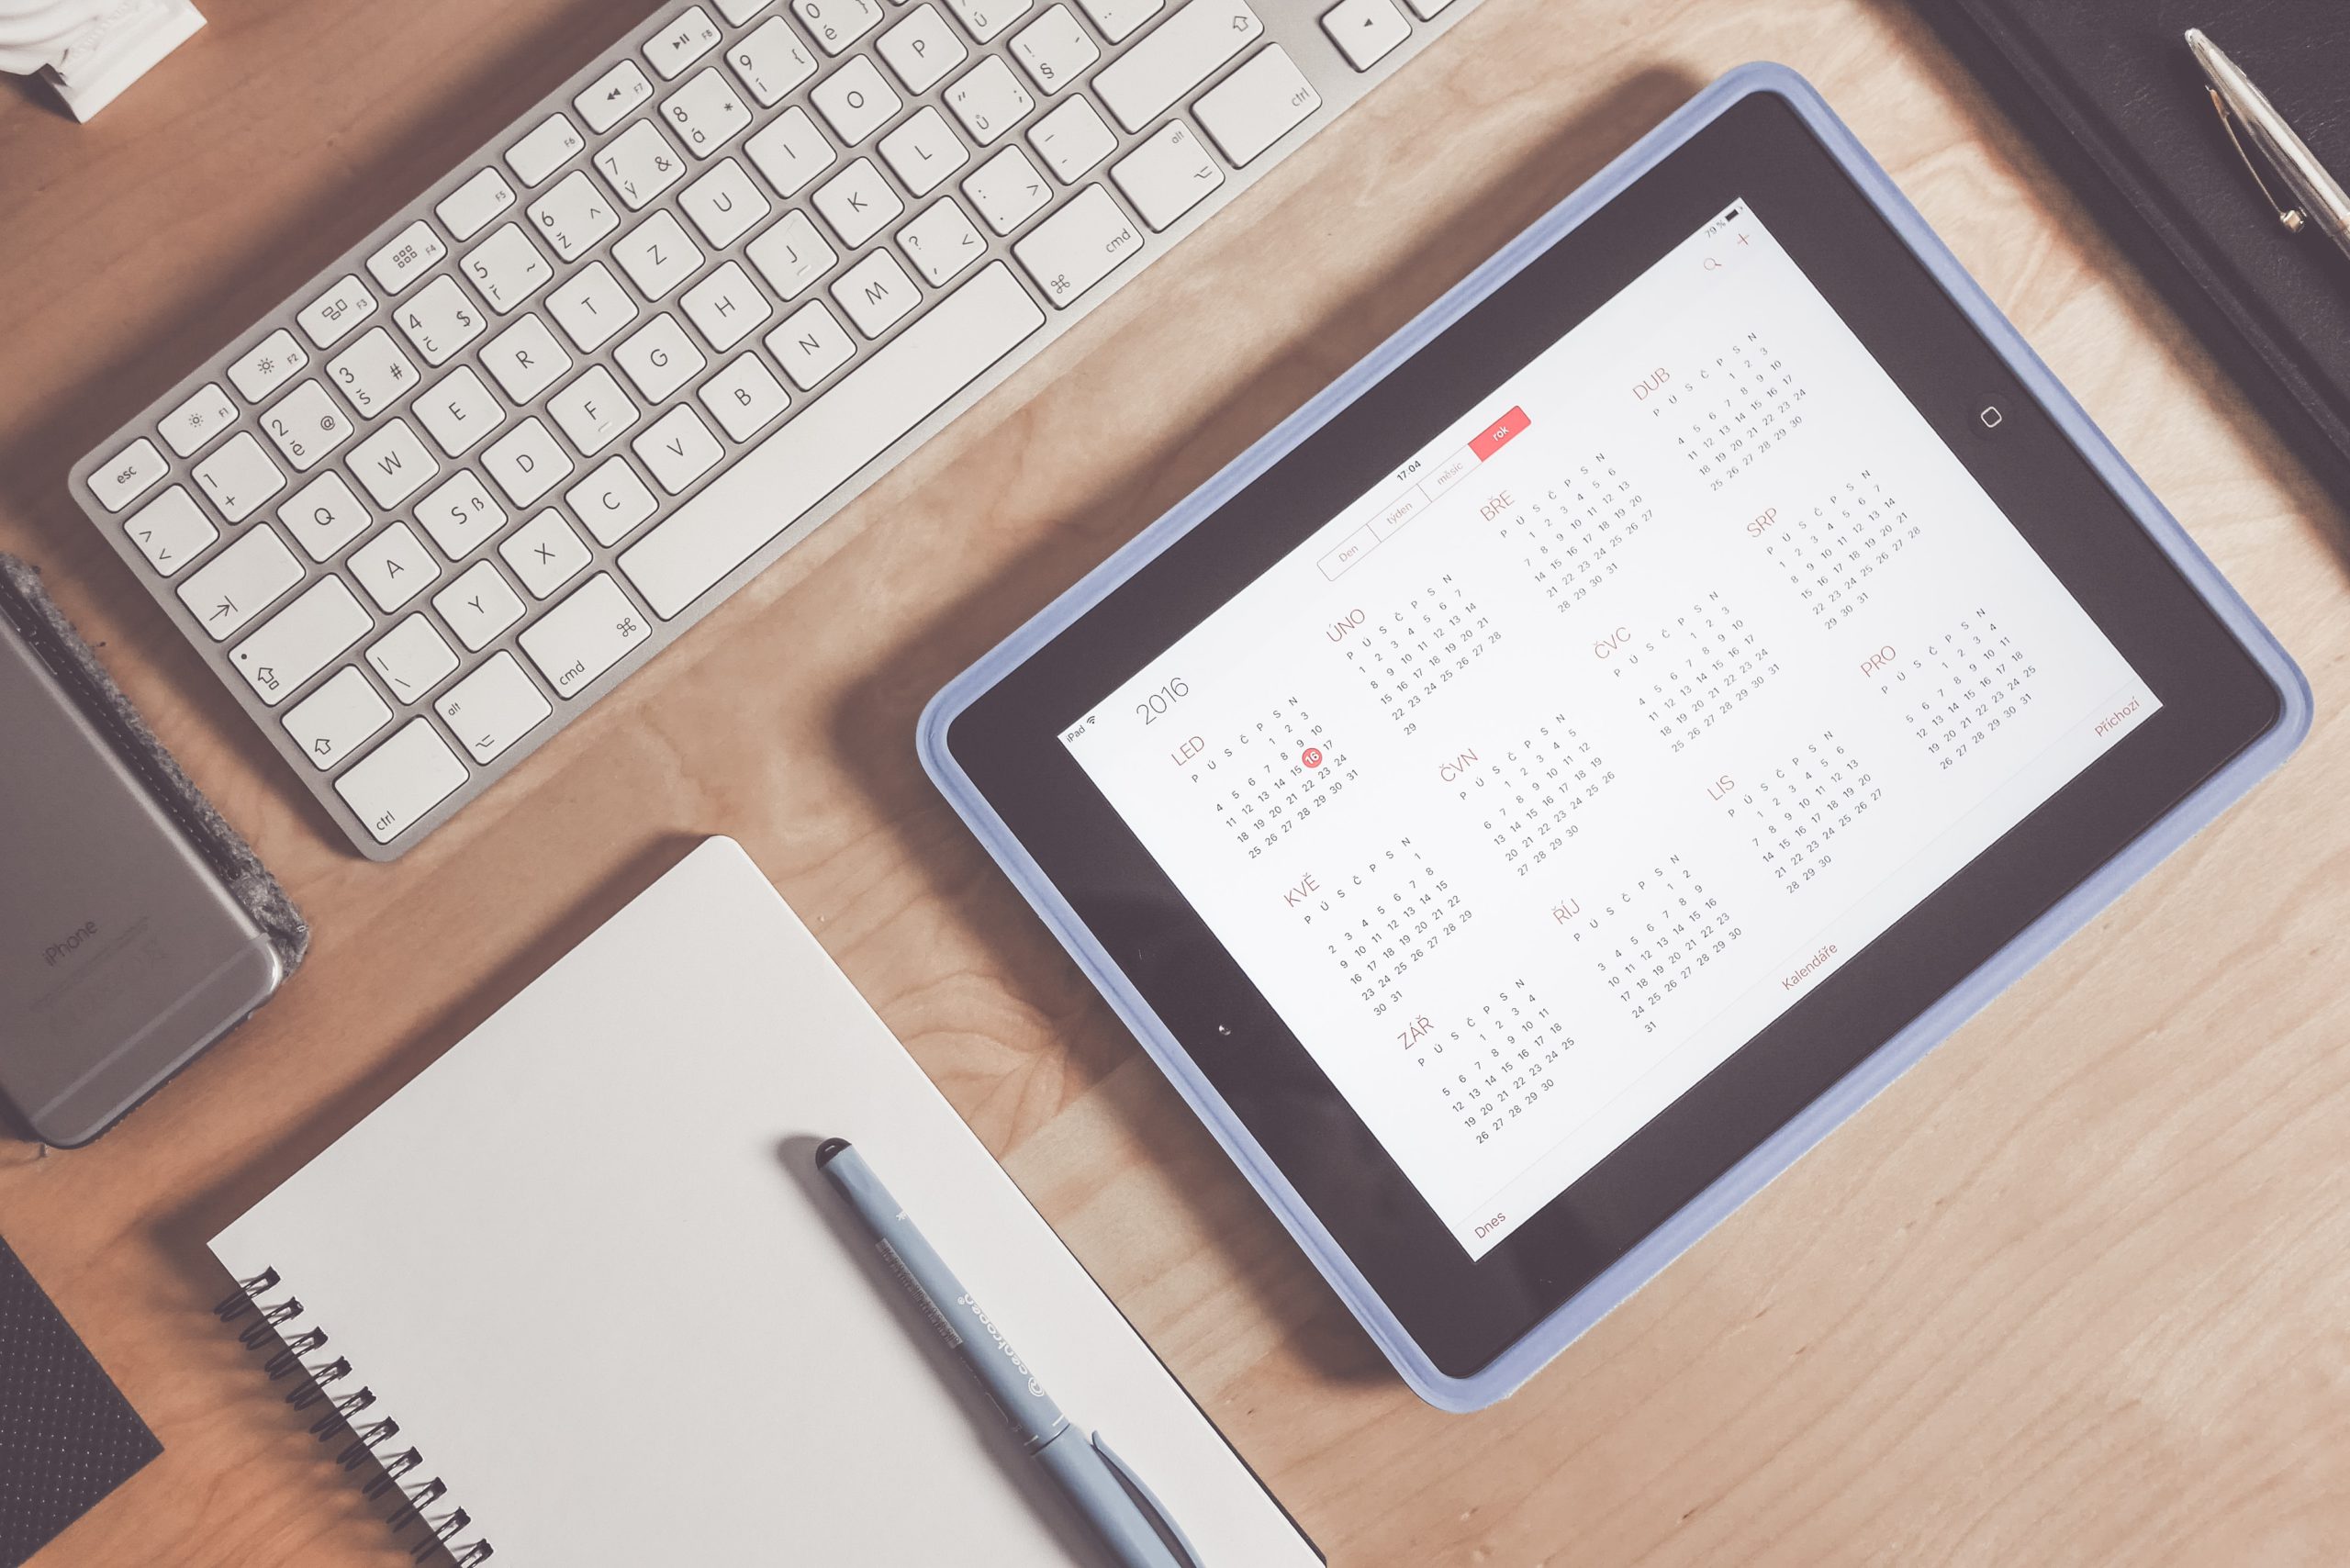 Calendar open on an iPad amongst a notepad, keyboard, and pen on a desk